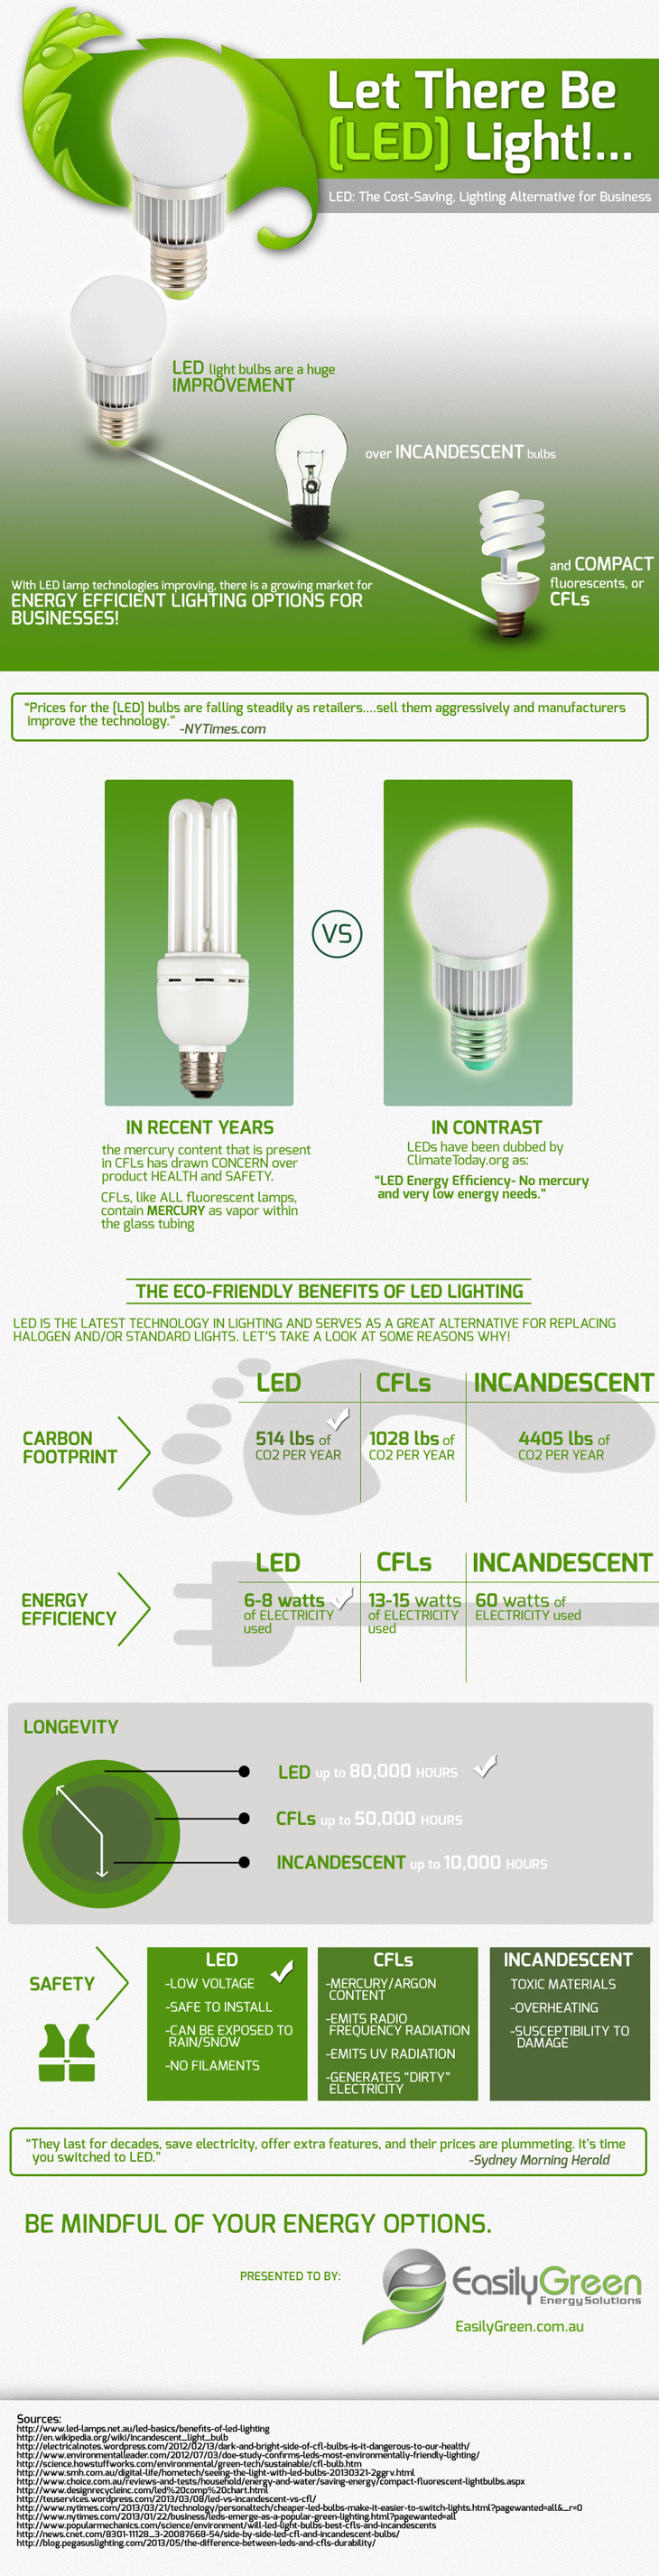 Led Light Bulbs Vs Cfl Vs Incandescent Bulbs